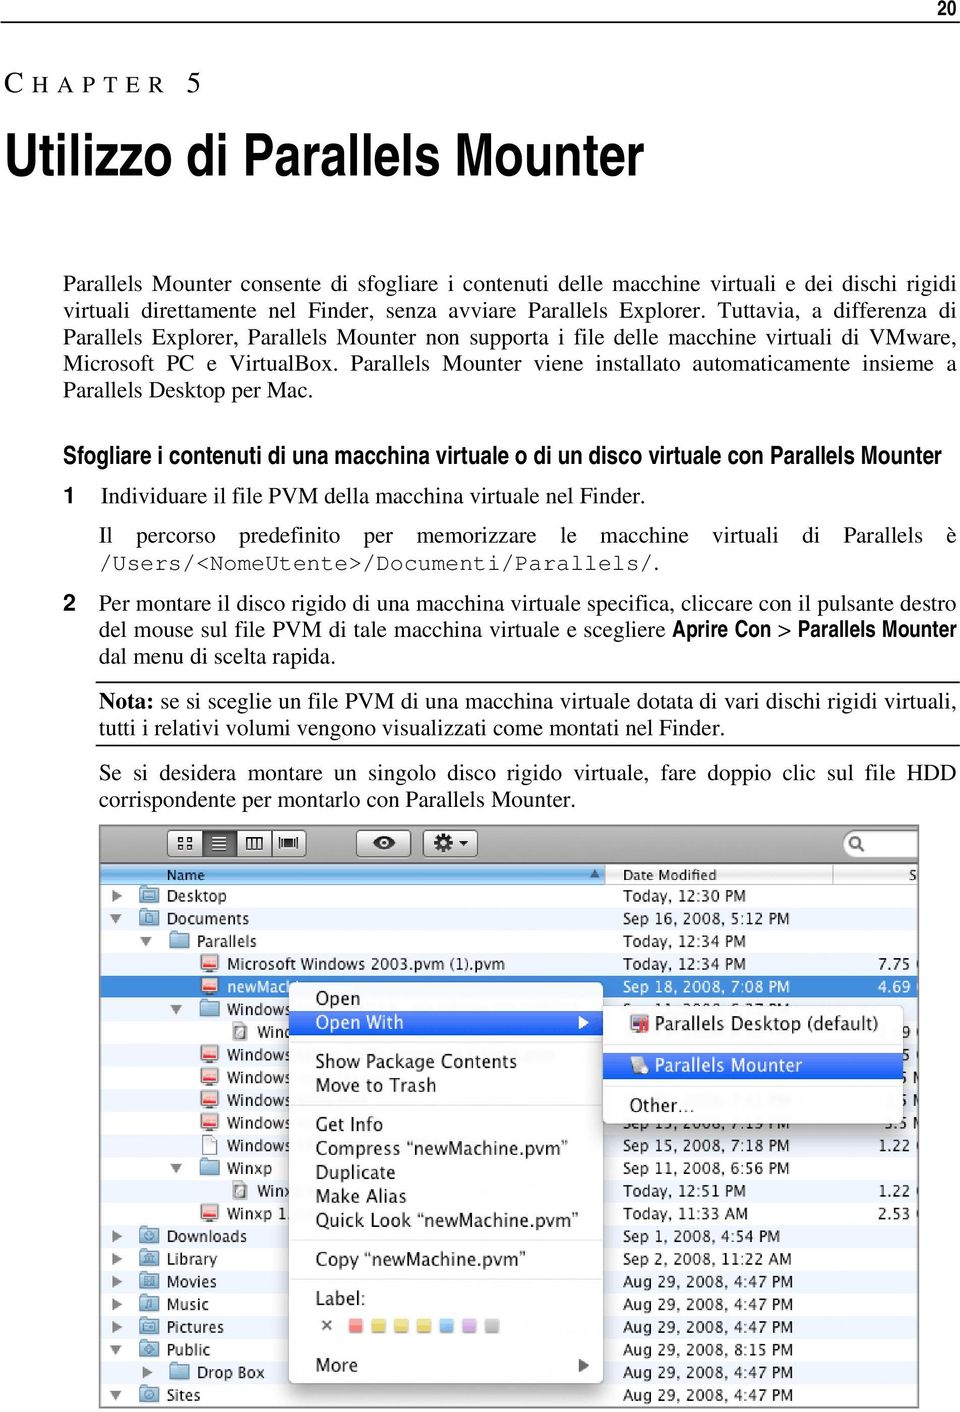 Parallels Mounter viene installato automaticamente insieme a Parallels Desktop per Mac.